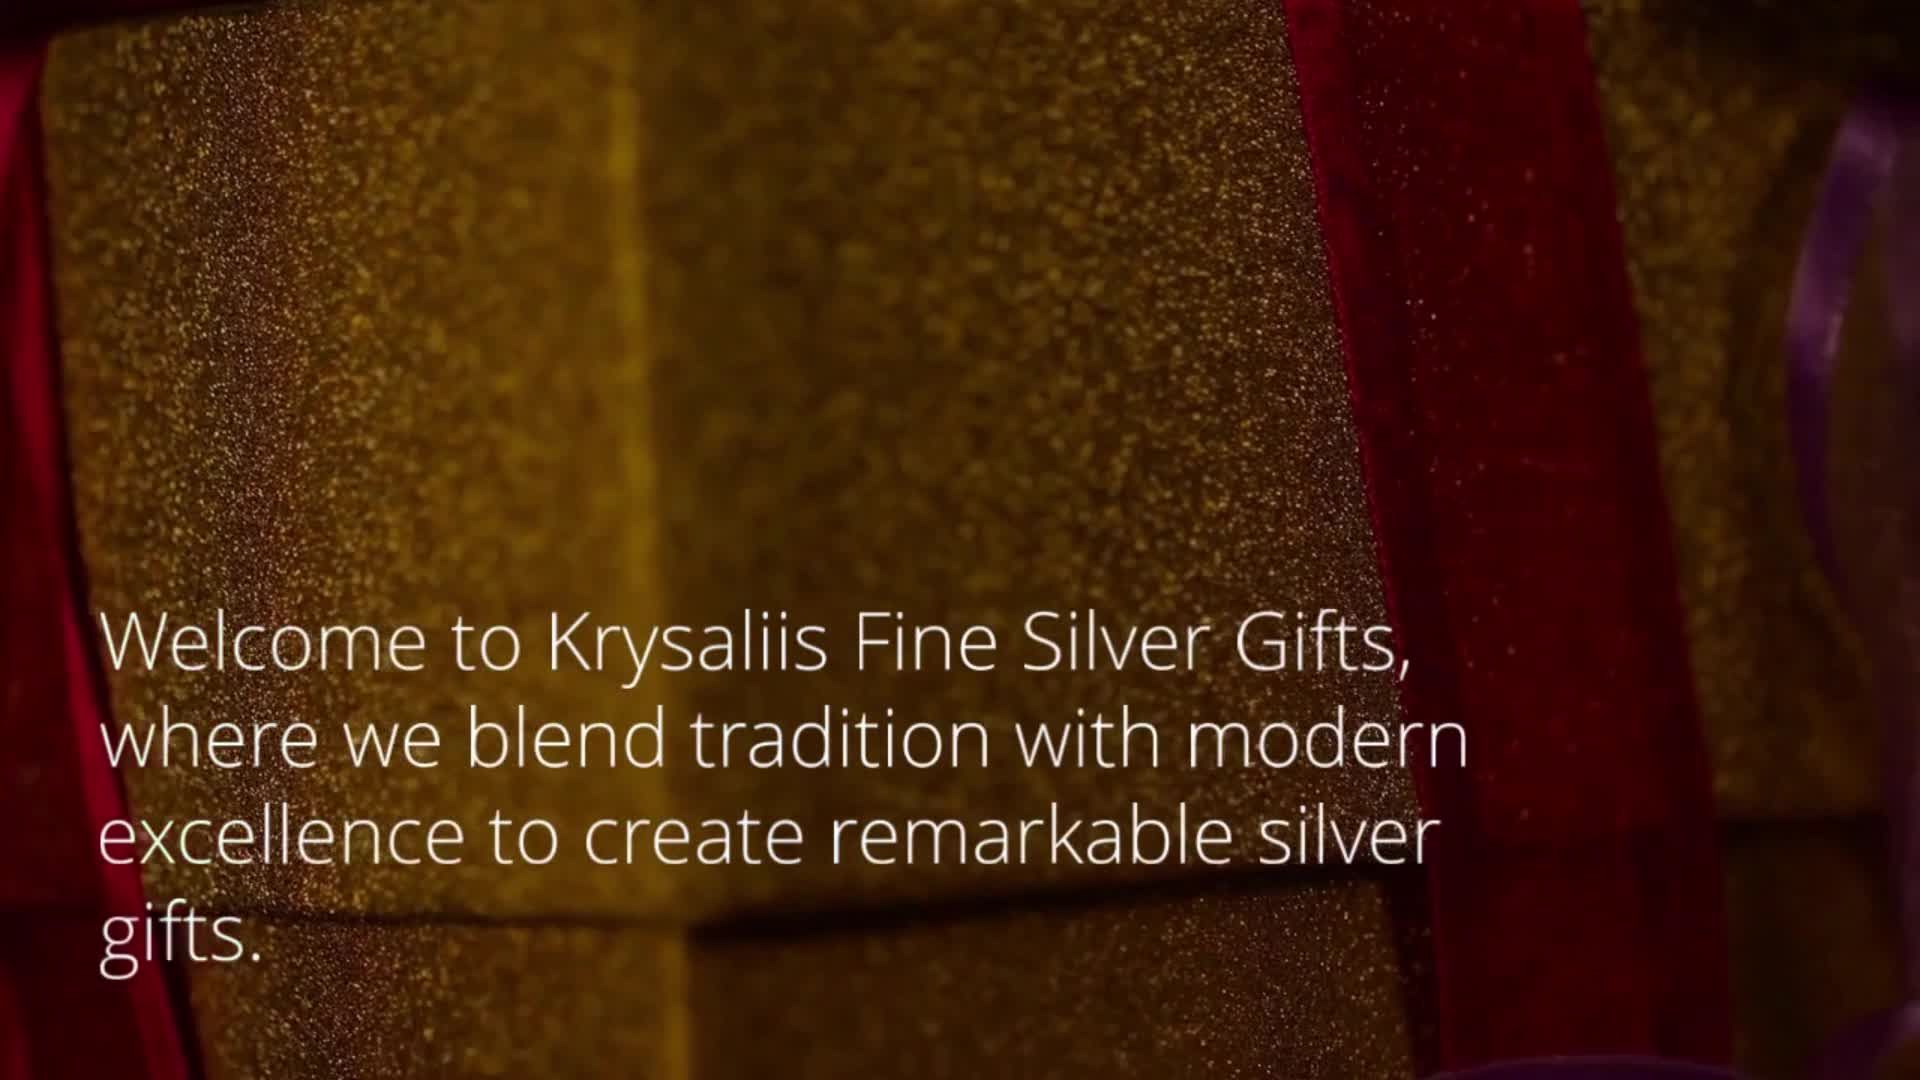 Dropbox - Krysaliis Fine Silver Gifts.mp4 - Simplify your life